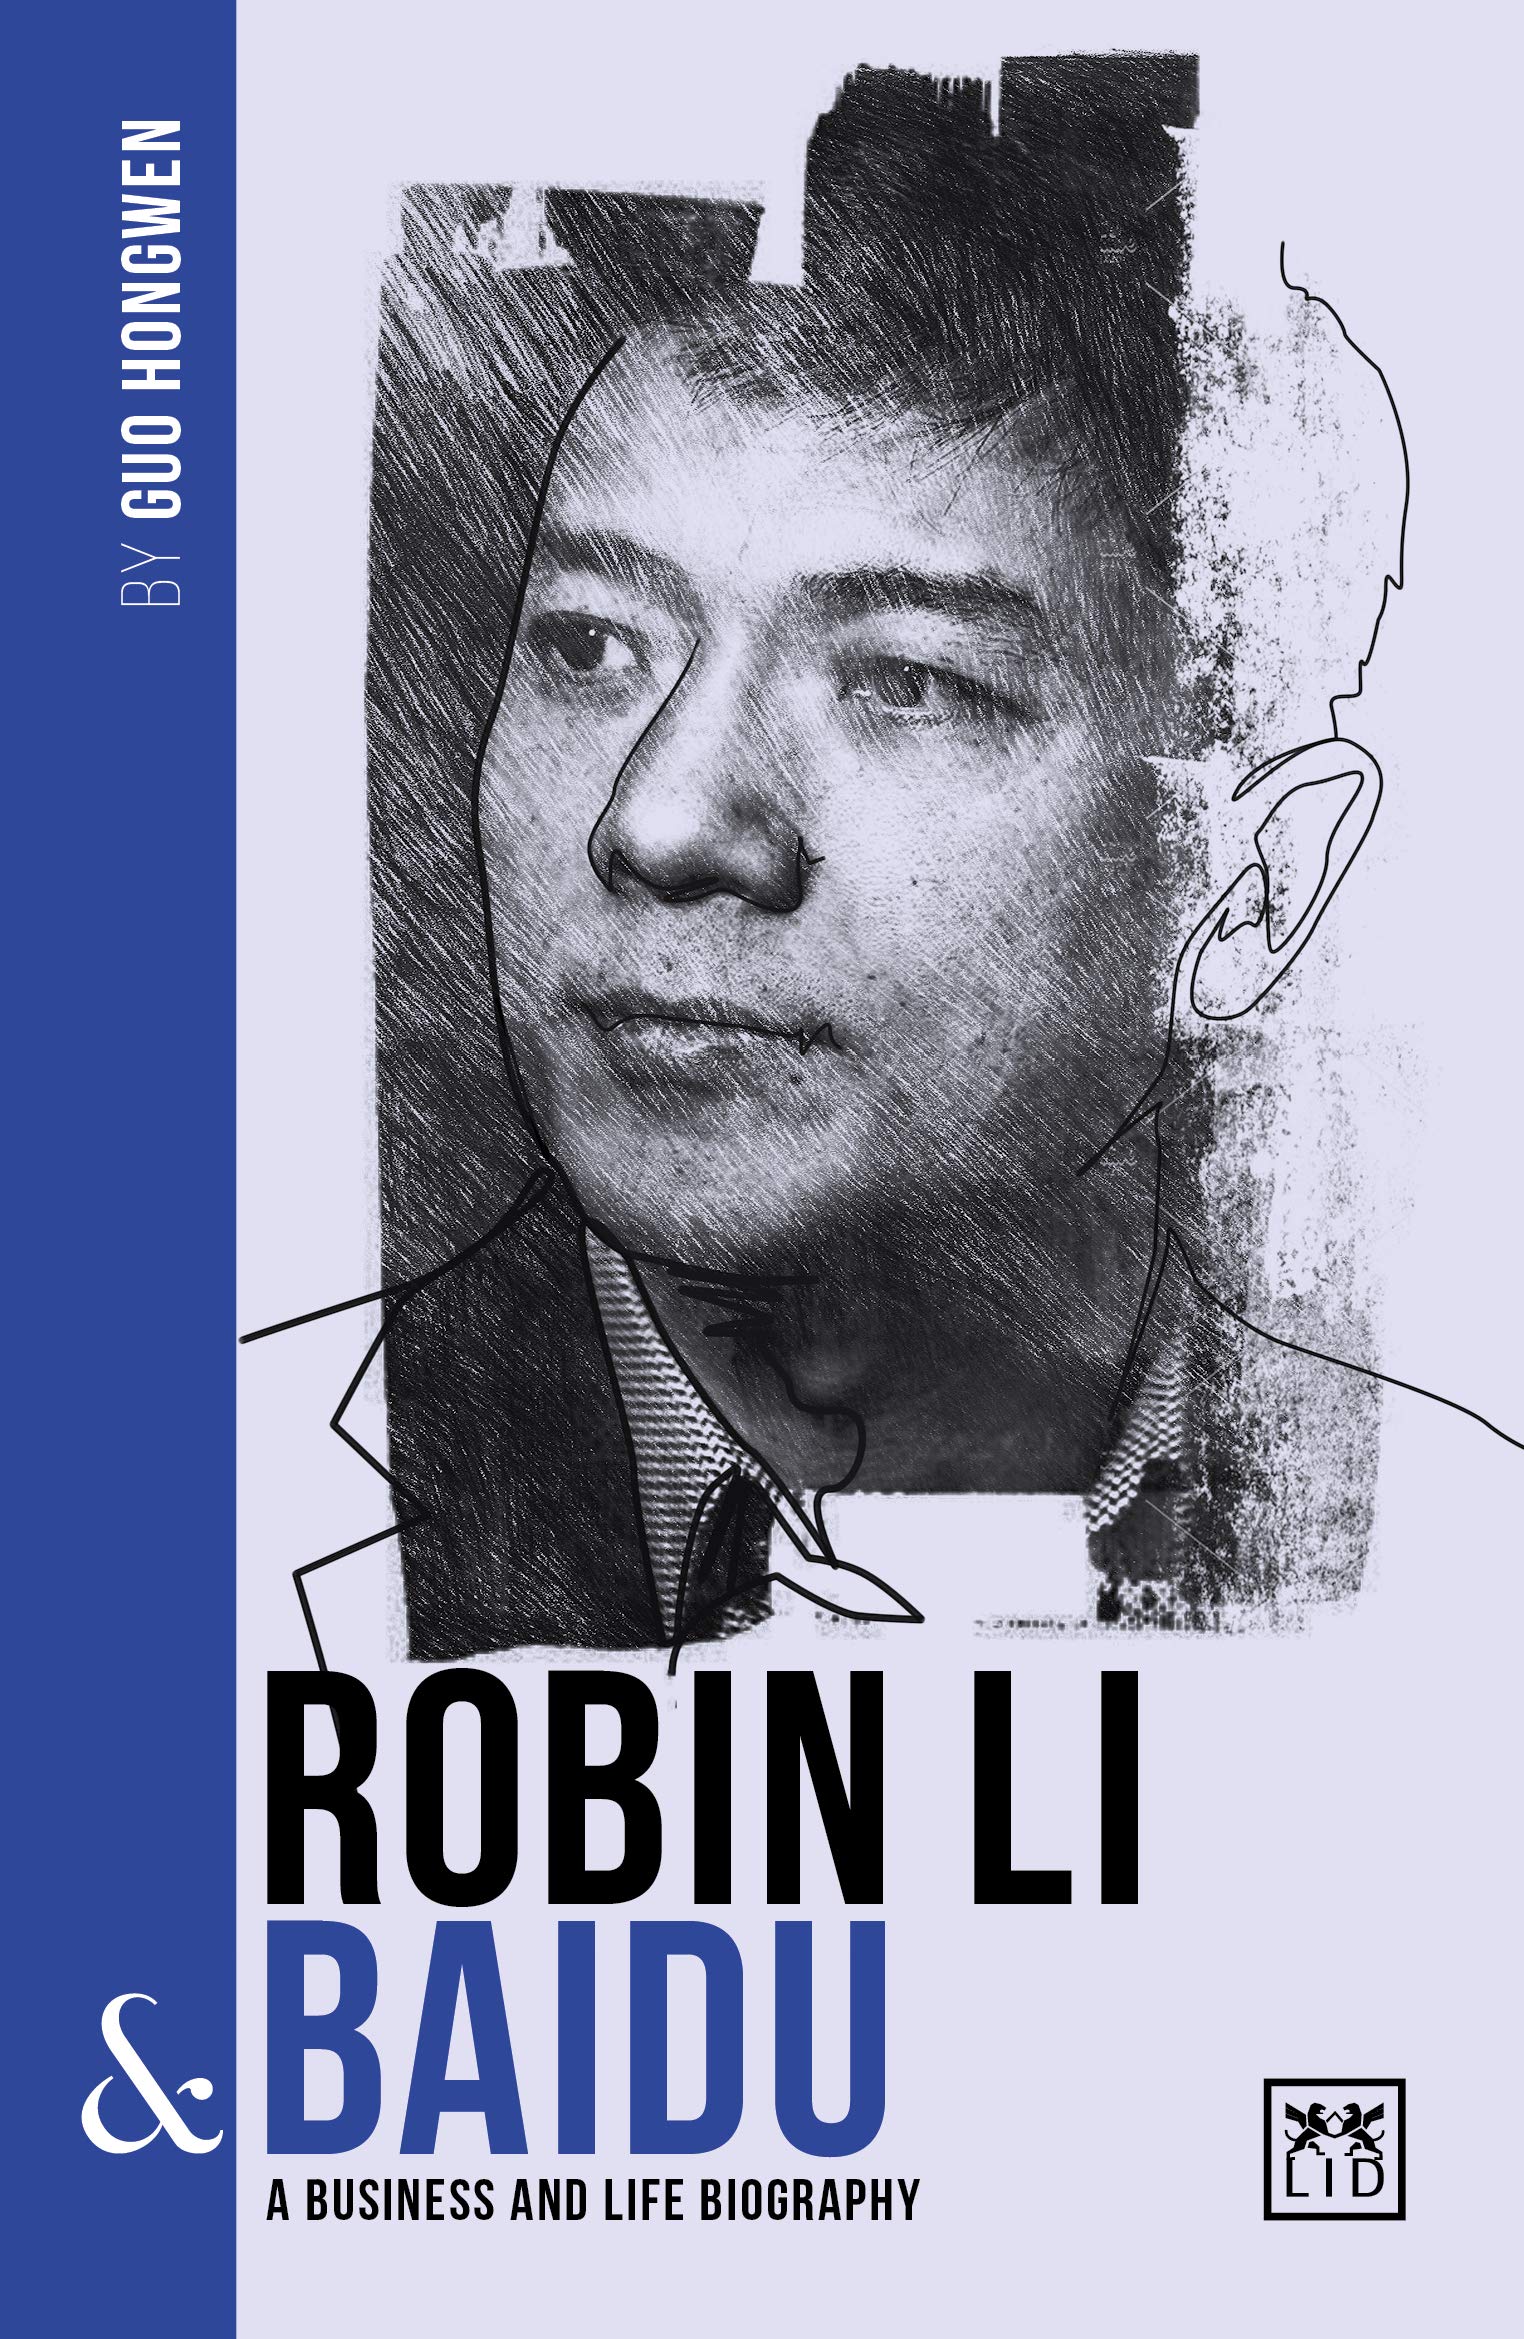 Robin Li & Baidu หนังสือภาษาอังกฤษพร้อมส่ง